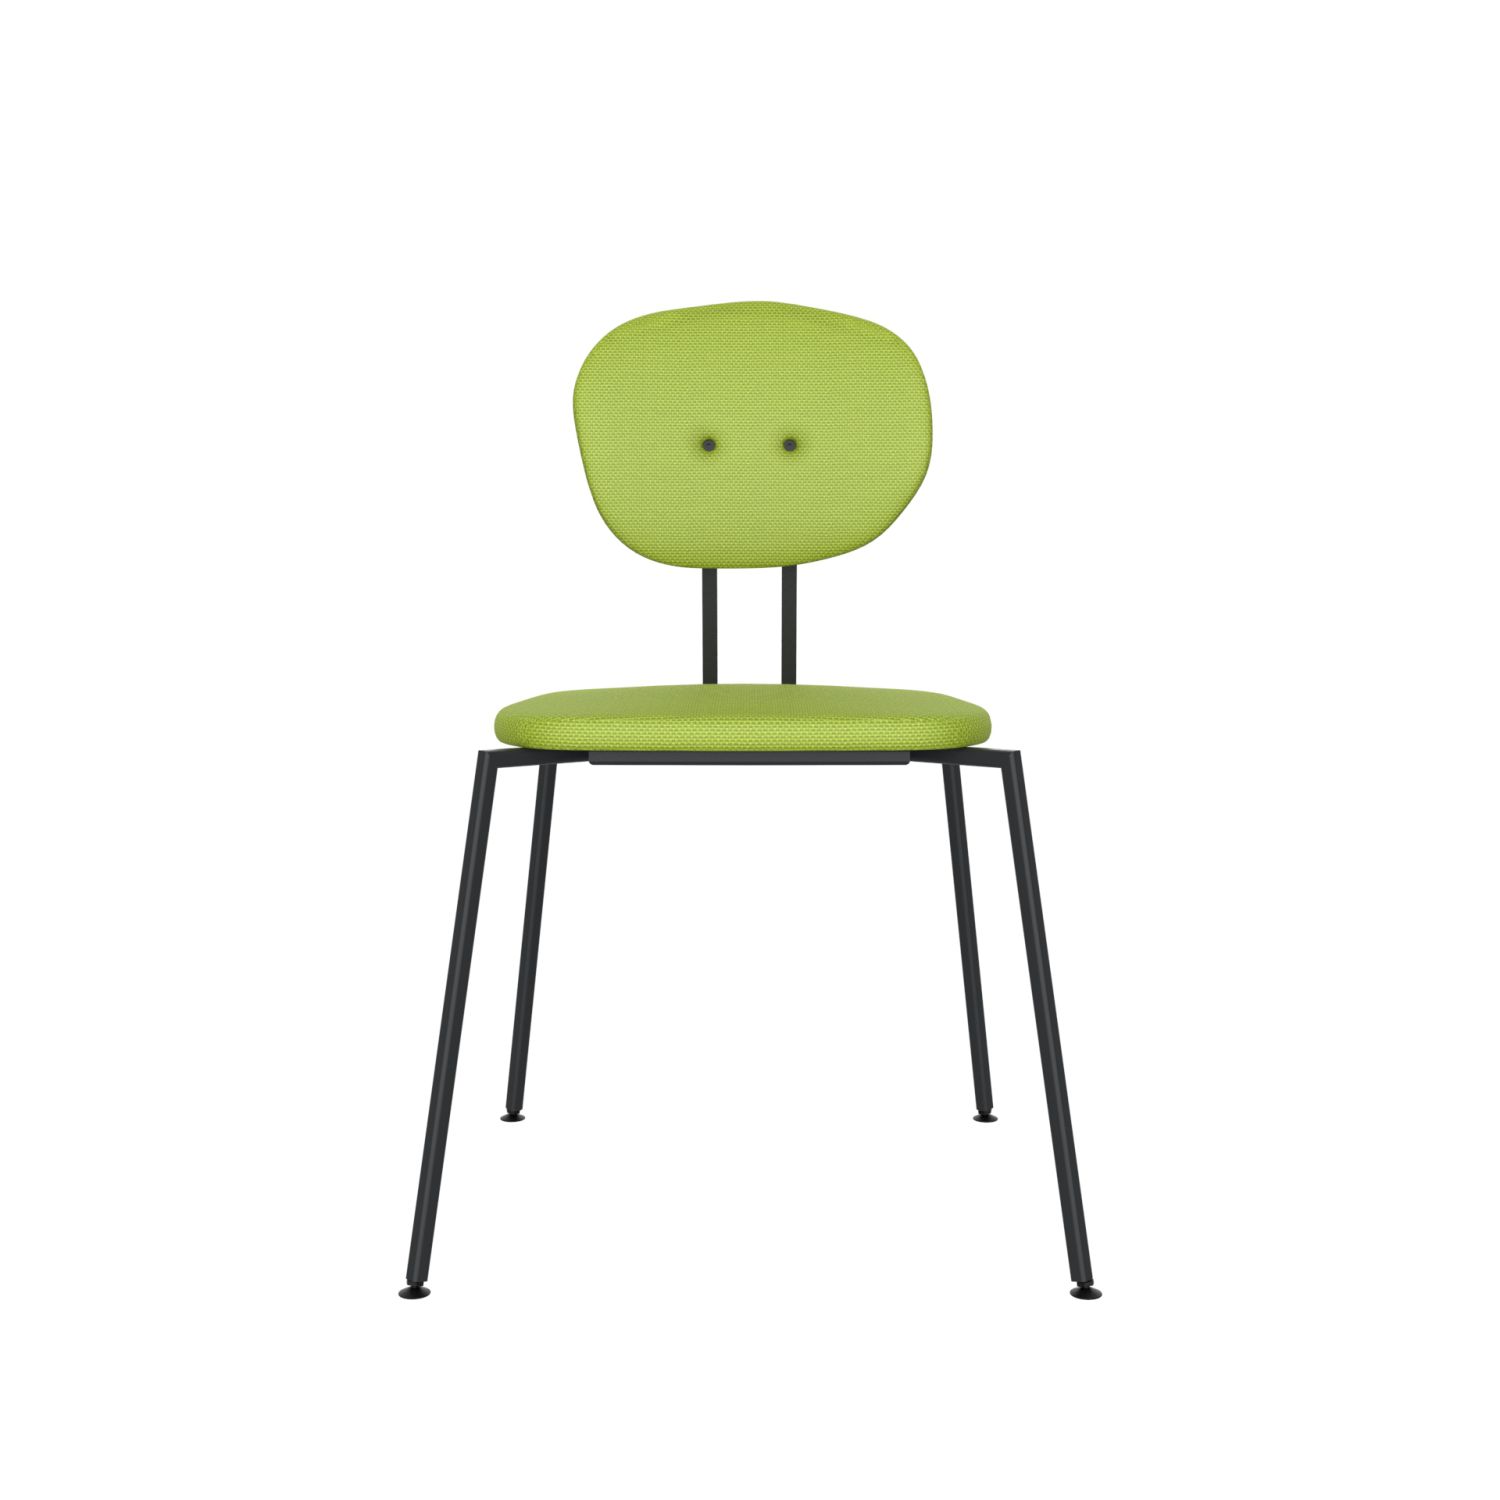 lensvelt maarten baas chair 141 stackable without armrests backrest a fairway green 020 black ral9005 hard leg ends